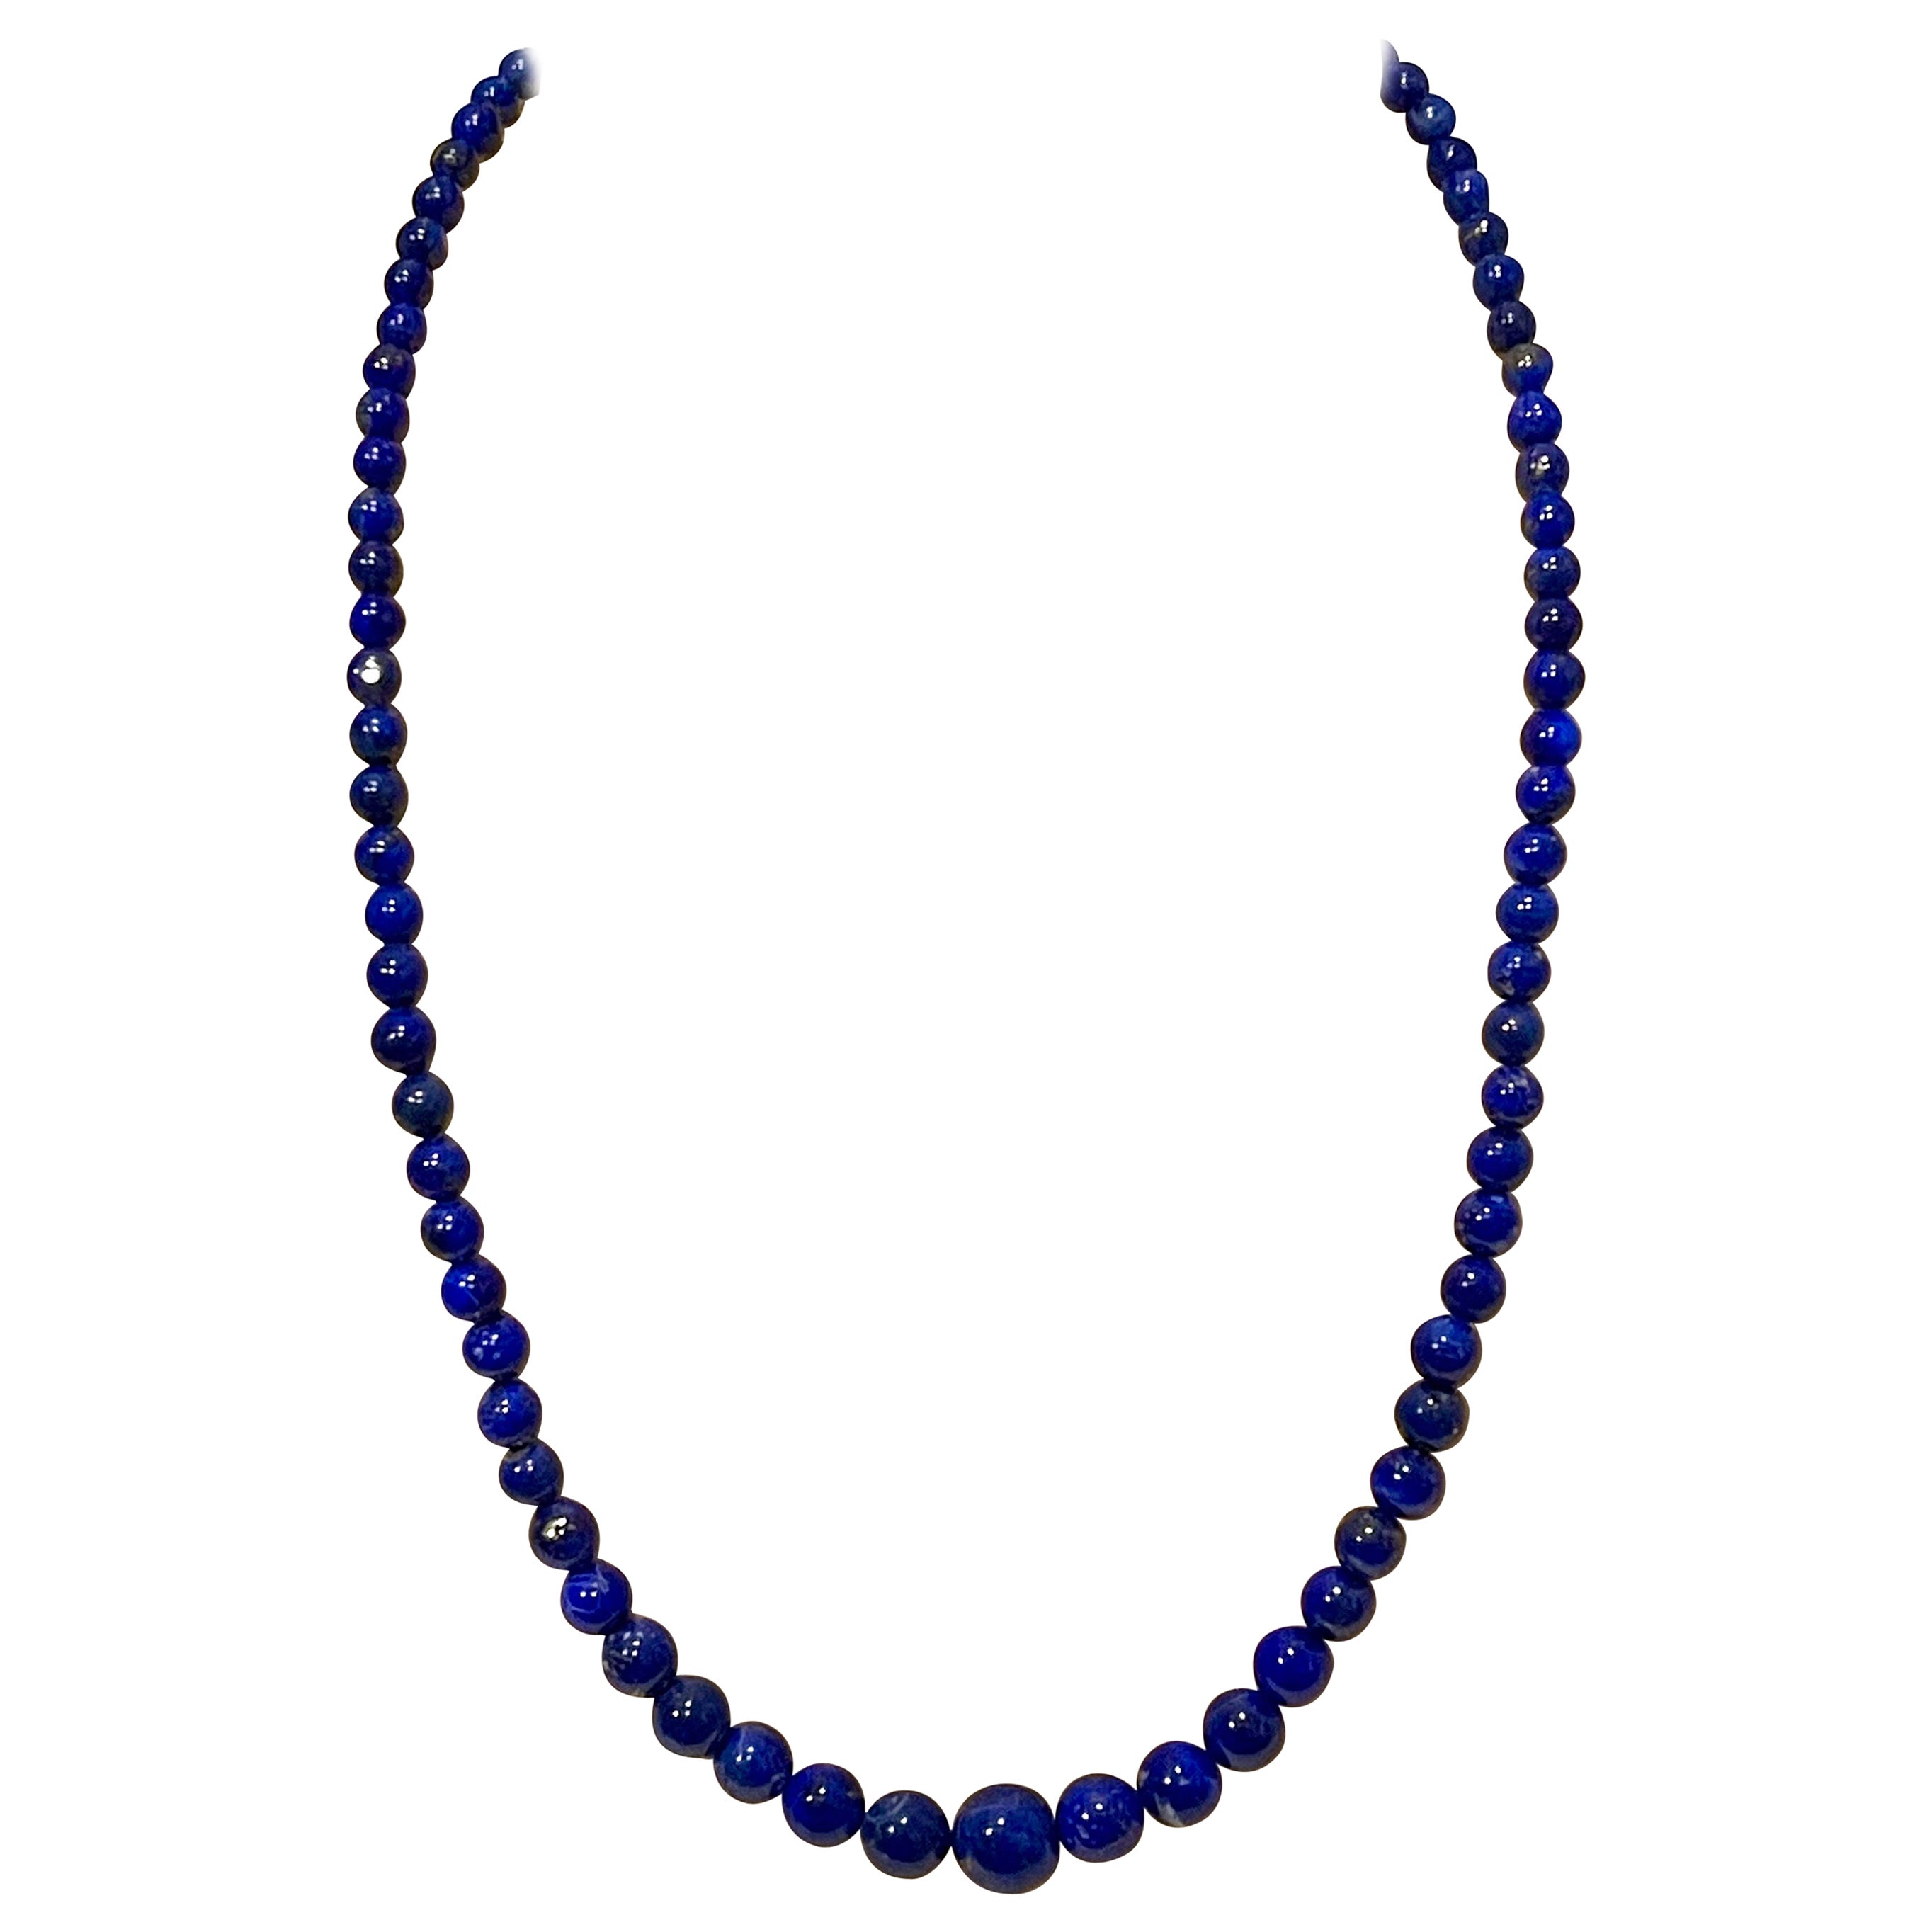 Vintage Lapis Lazuli Single Strand Necklace with 14 Karat Yellow Long Hook Clasp